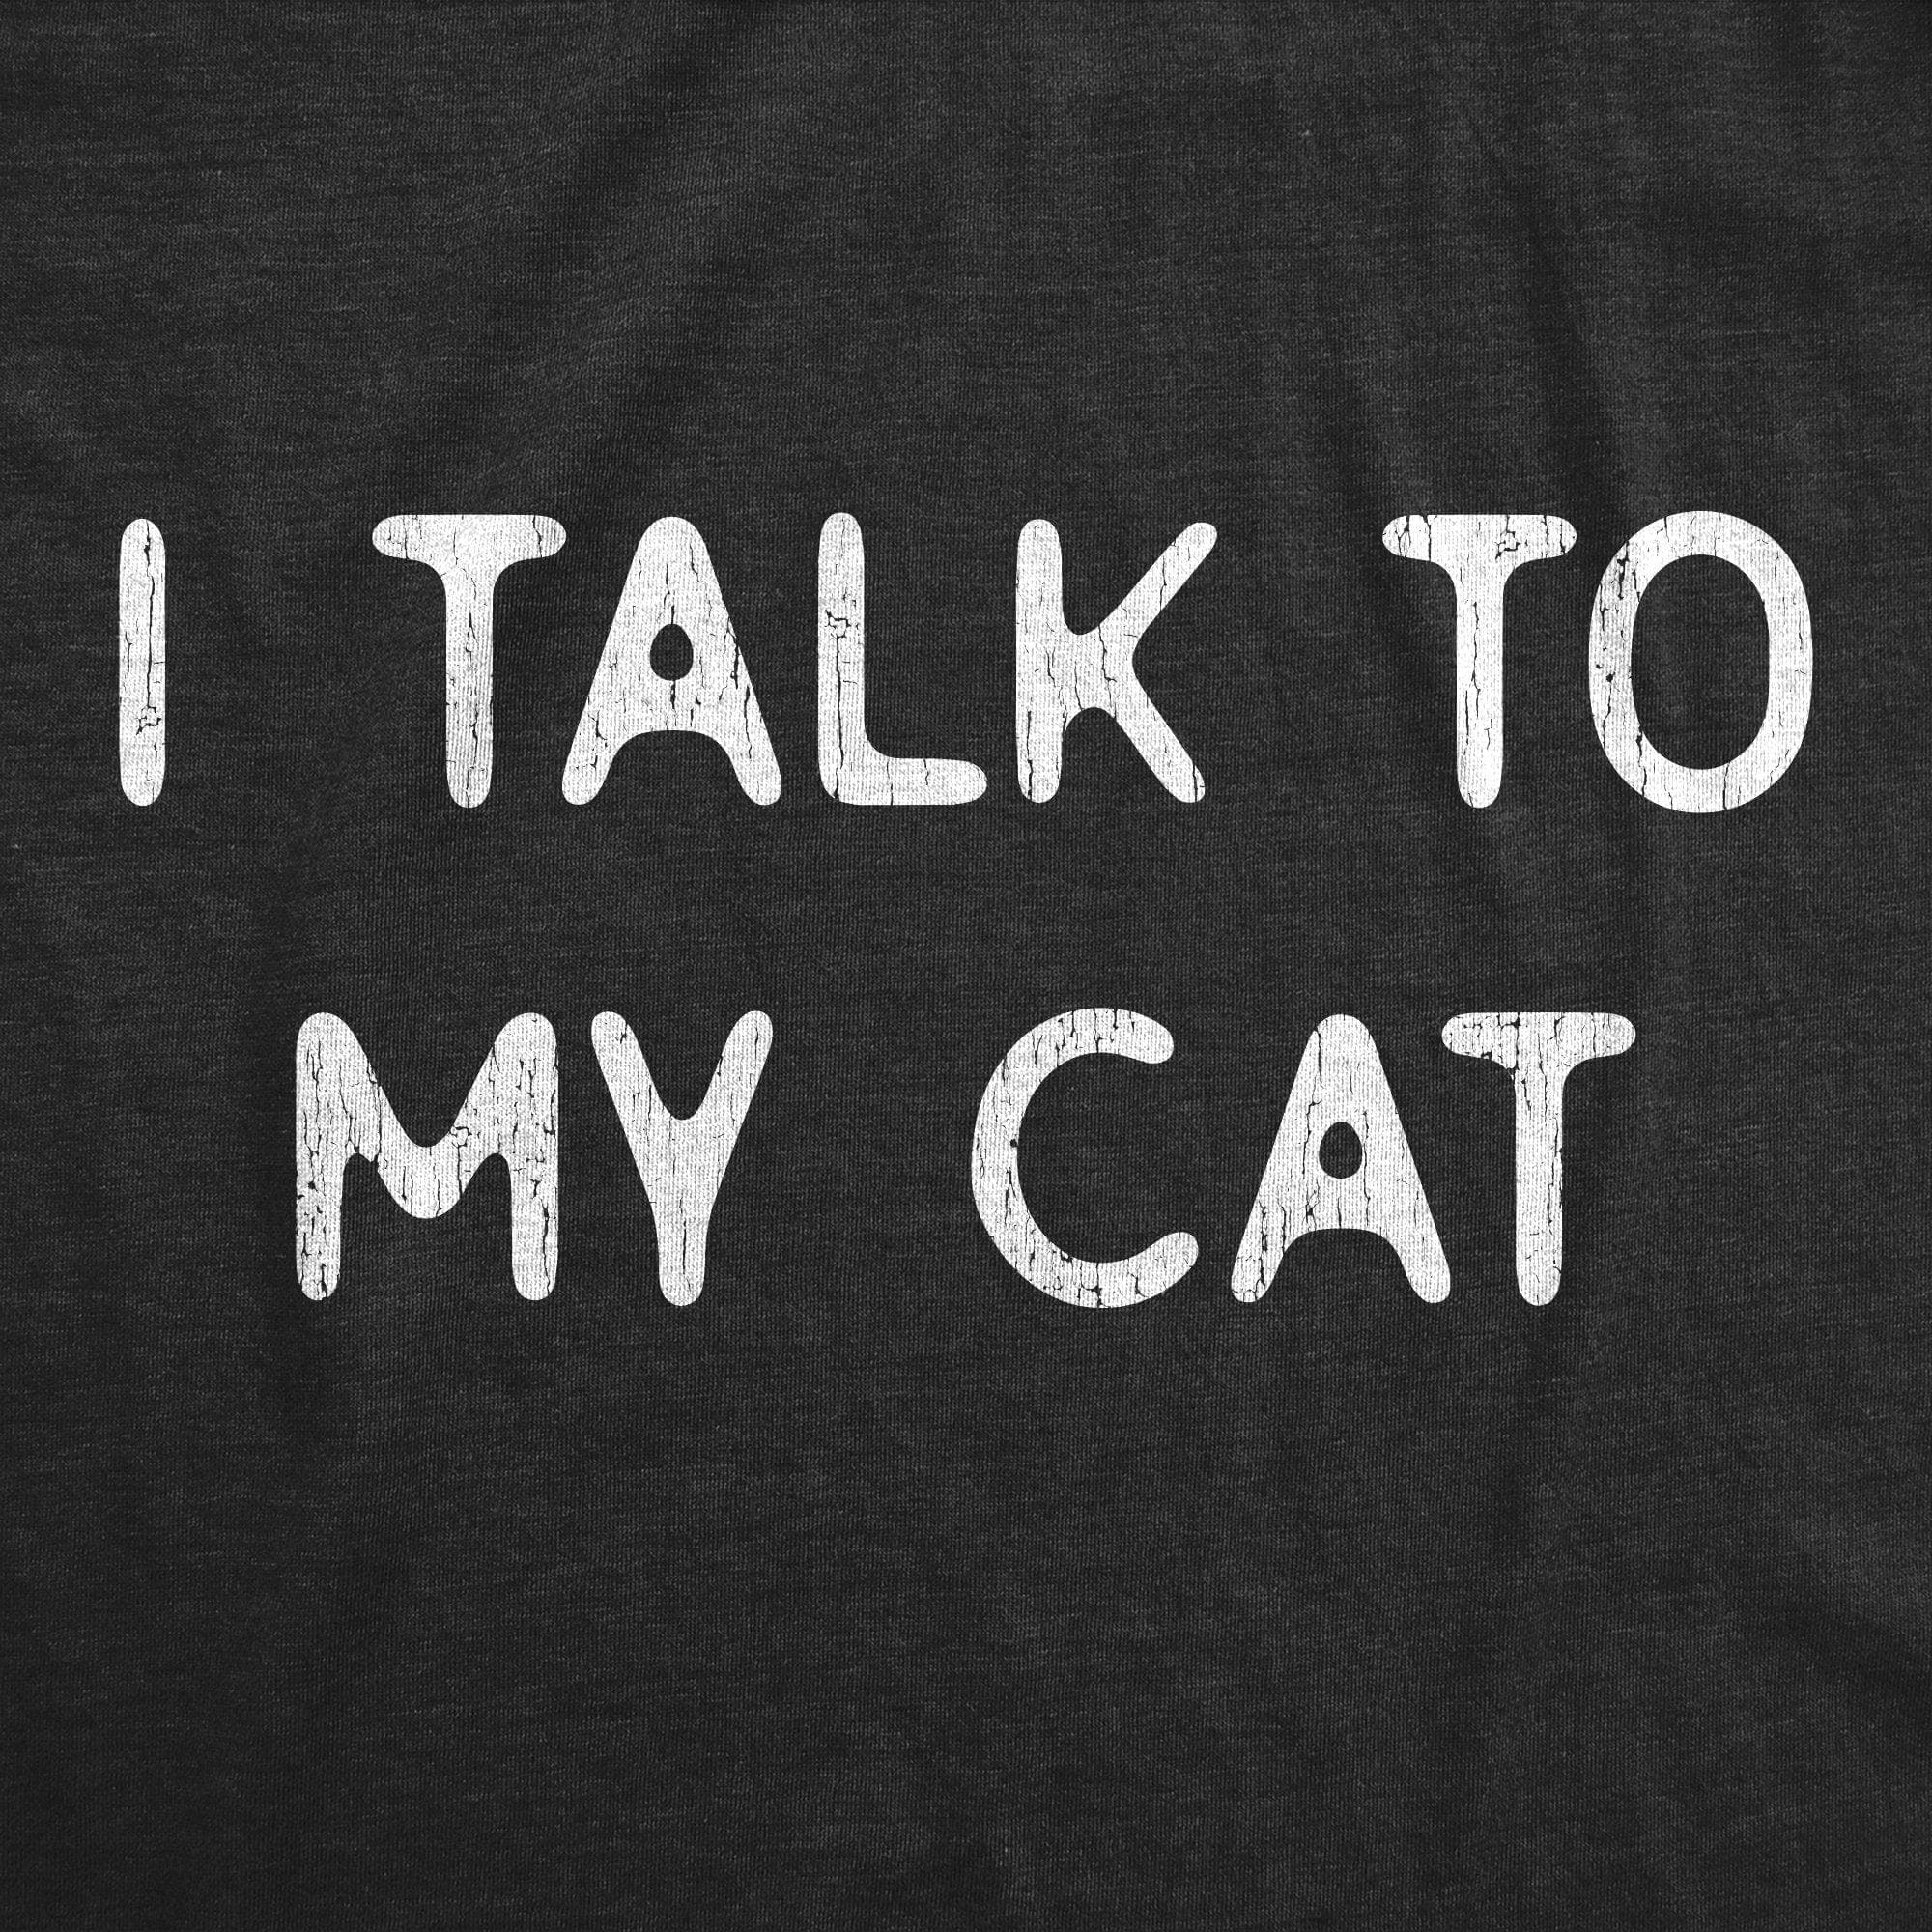 I Talk To My Cat Men's Tshirt - Crazy Dog T-Shirts